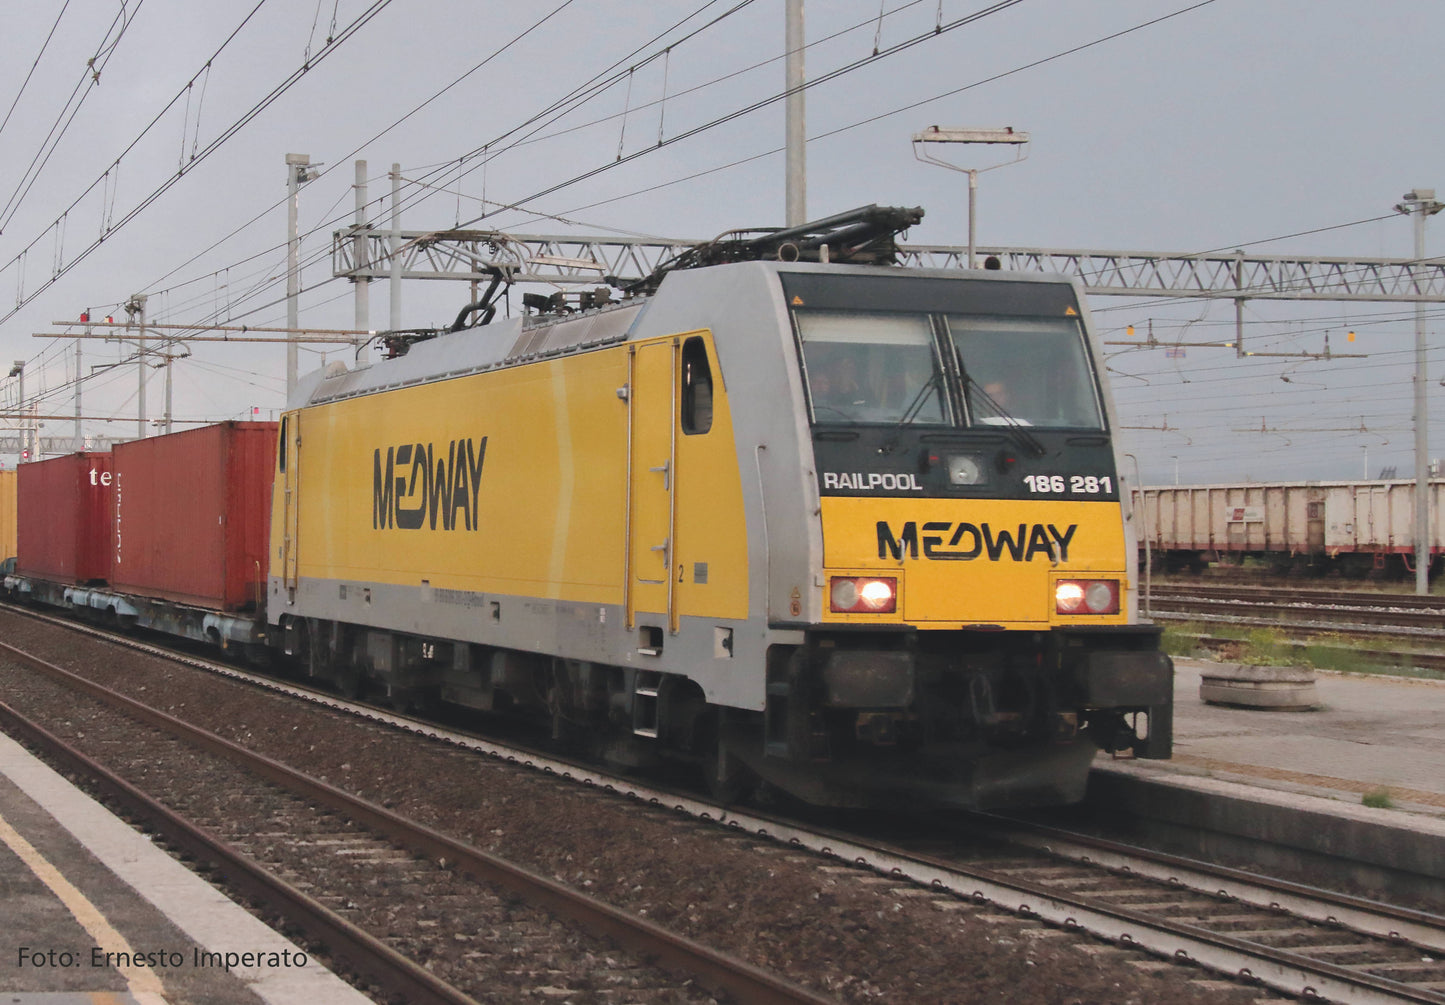 Piko 21630 - BR 186 Electric Locomotive Medway VI